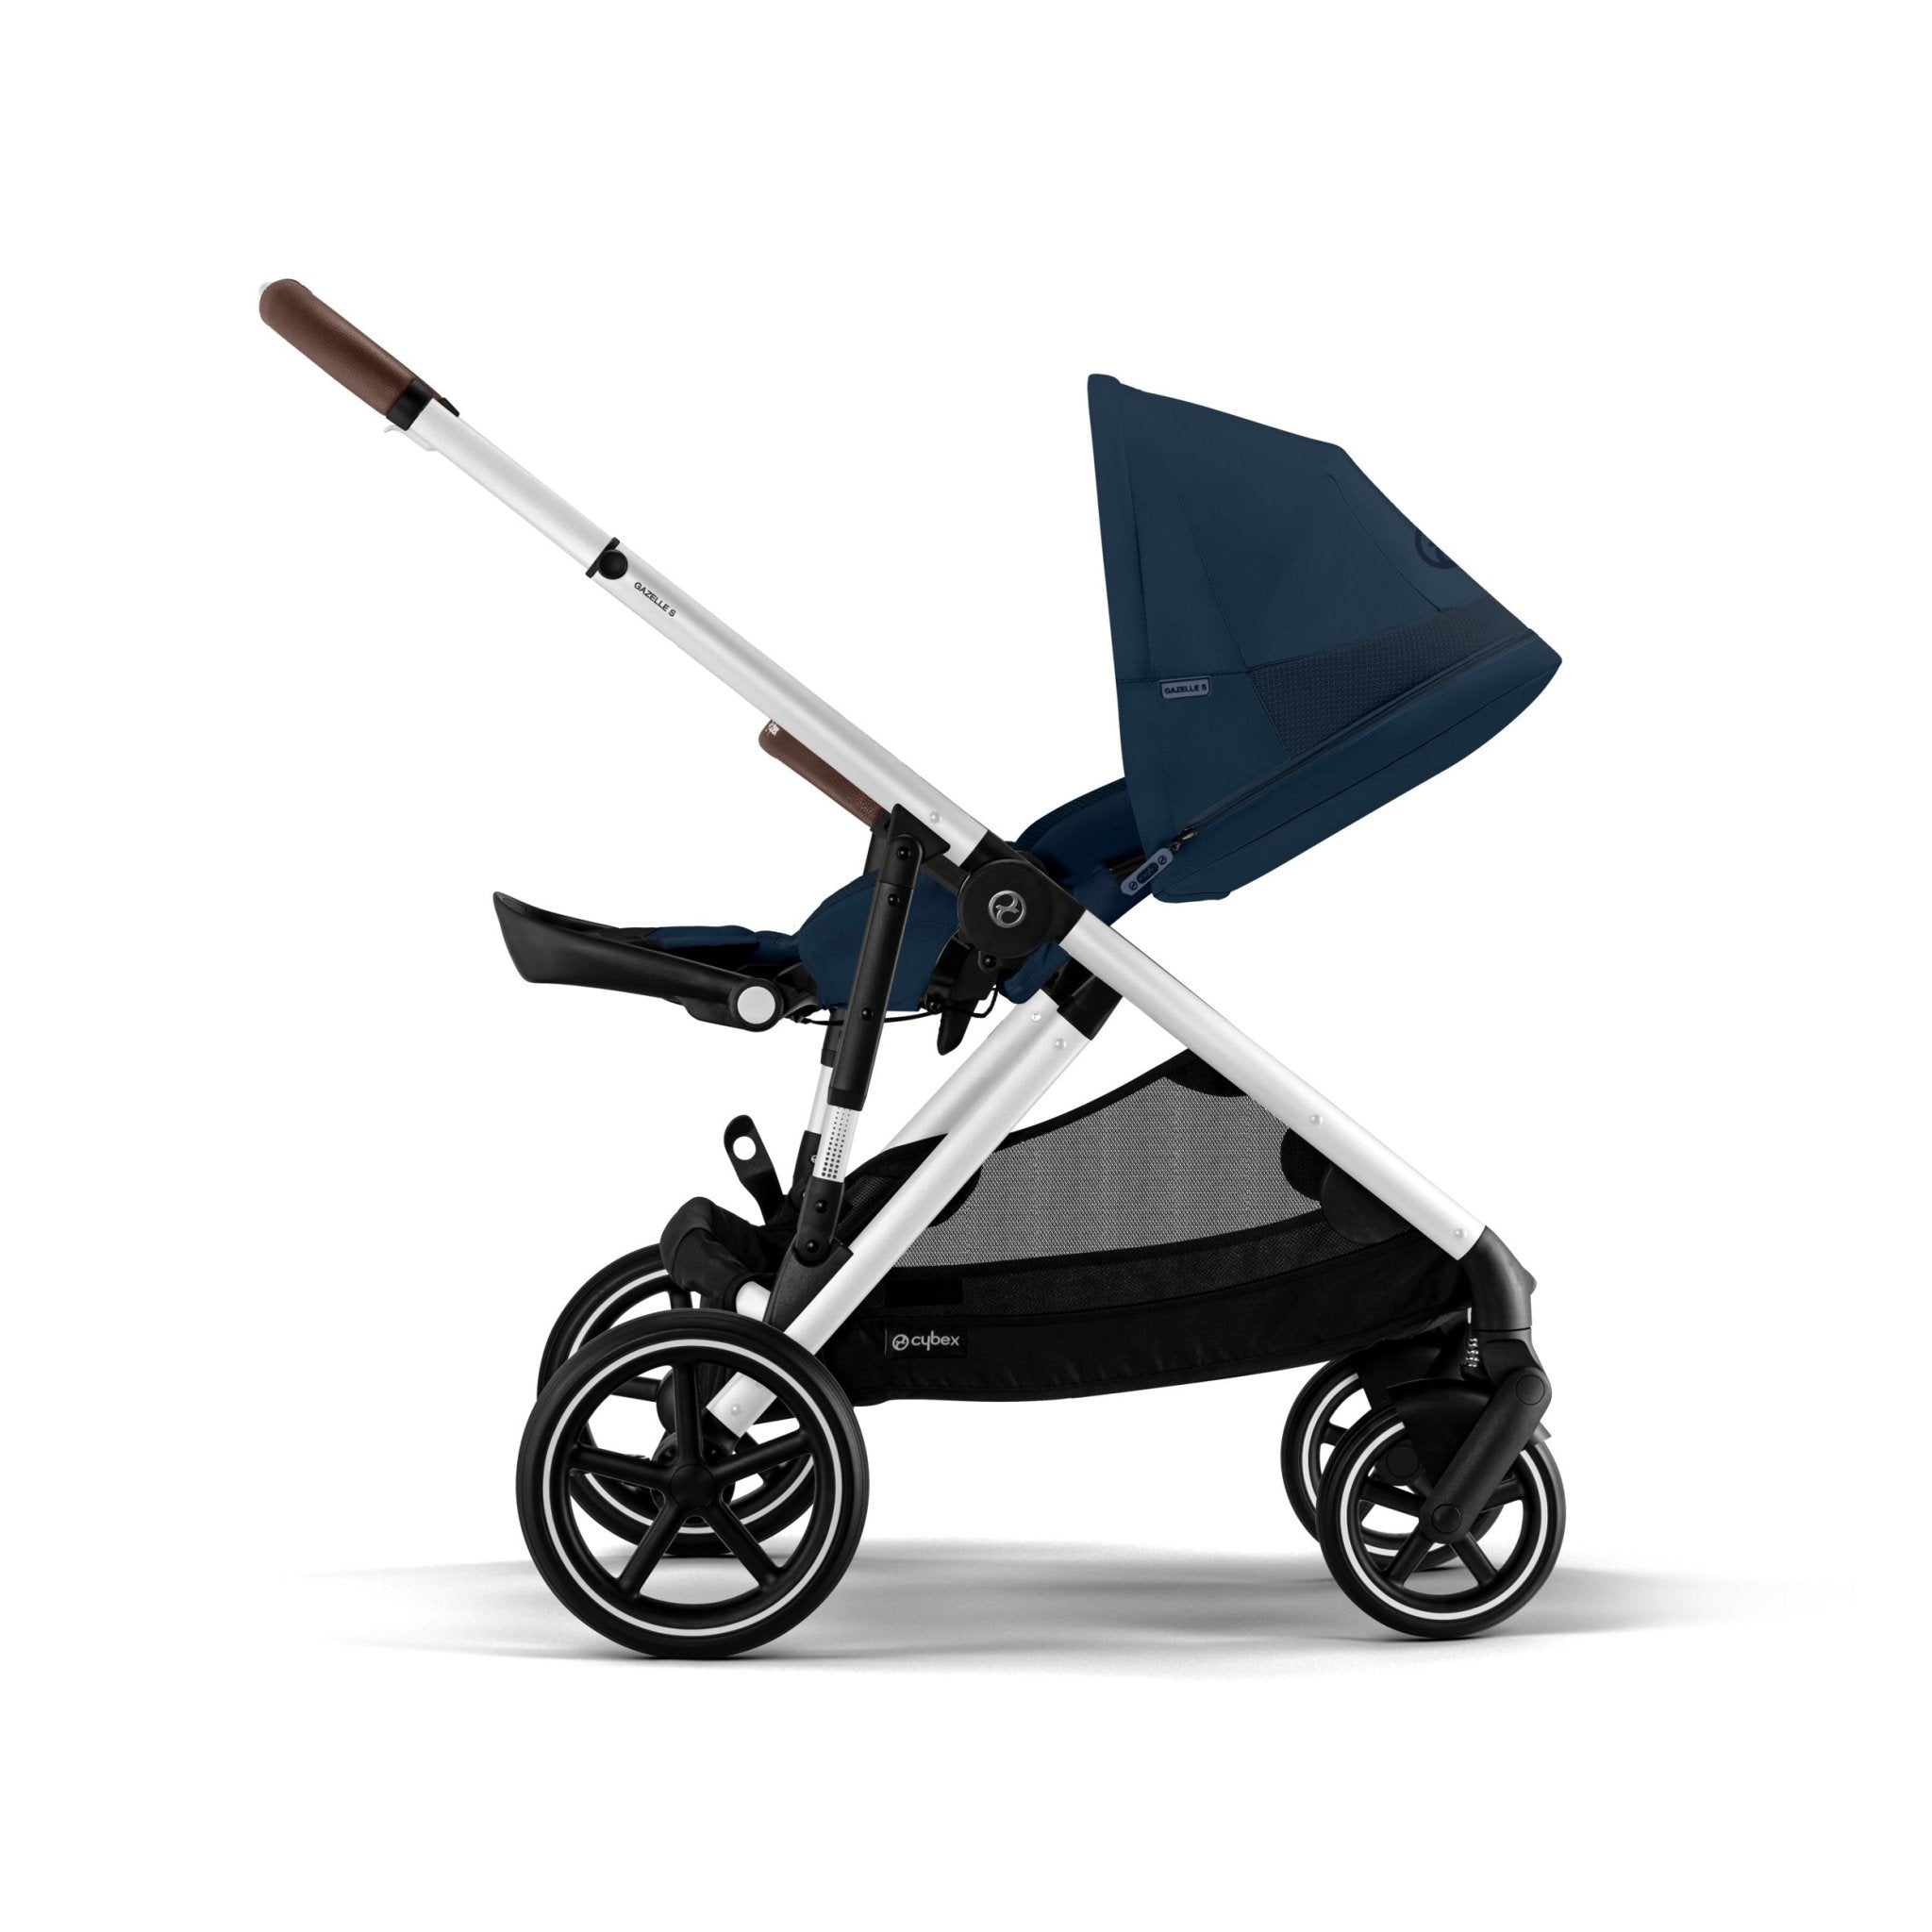 Cybex Gazelle S 2 Stroller - ANB Baby -4063846398317$500 - $1000